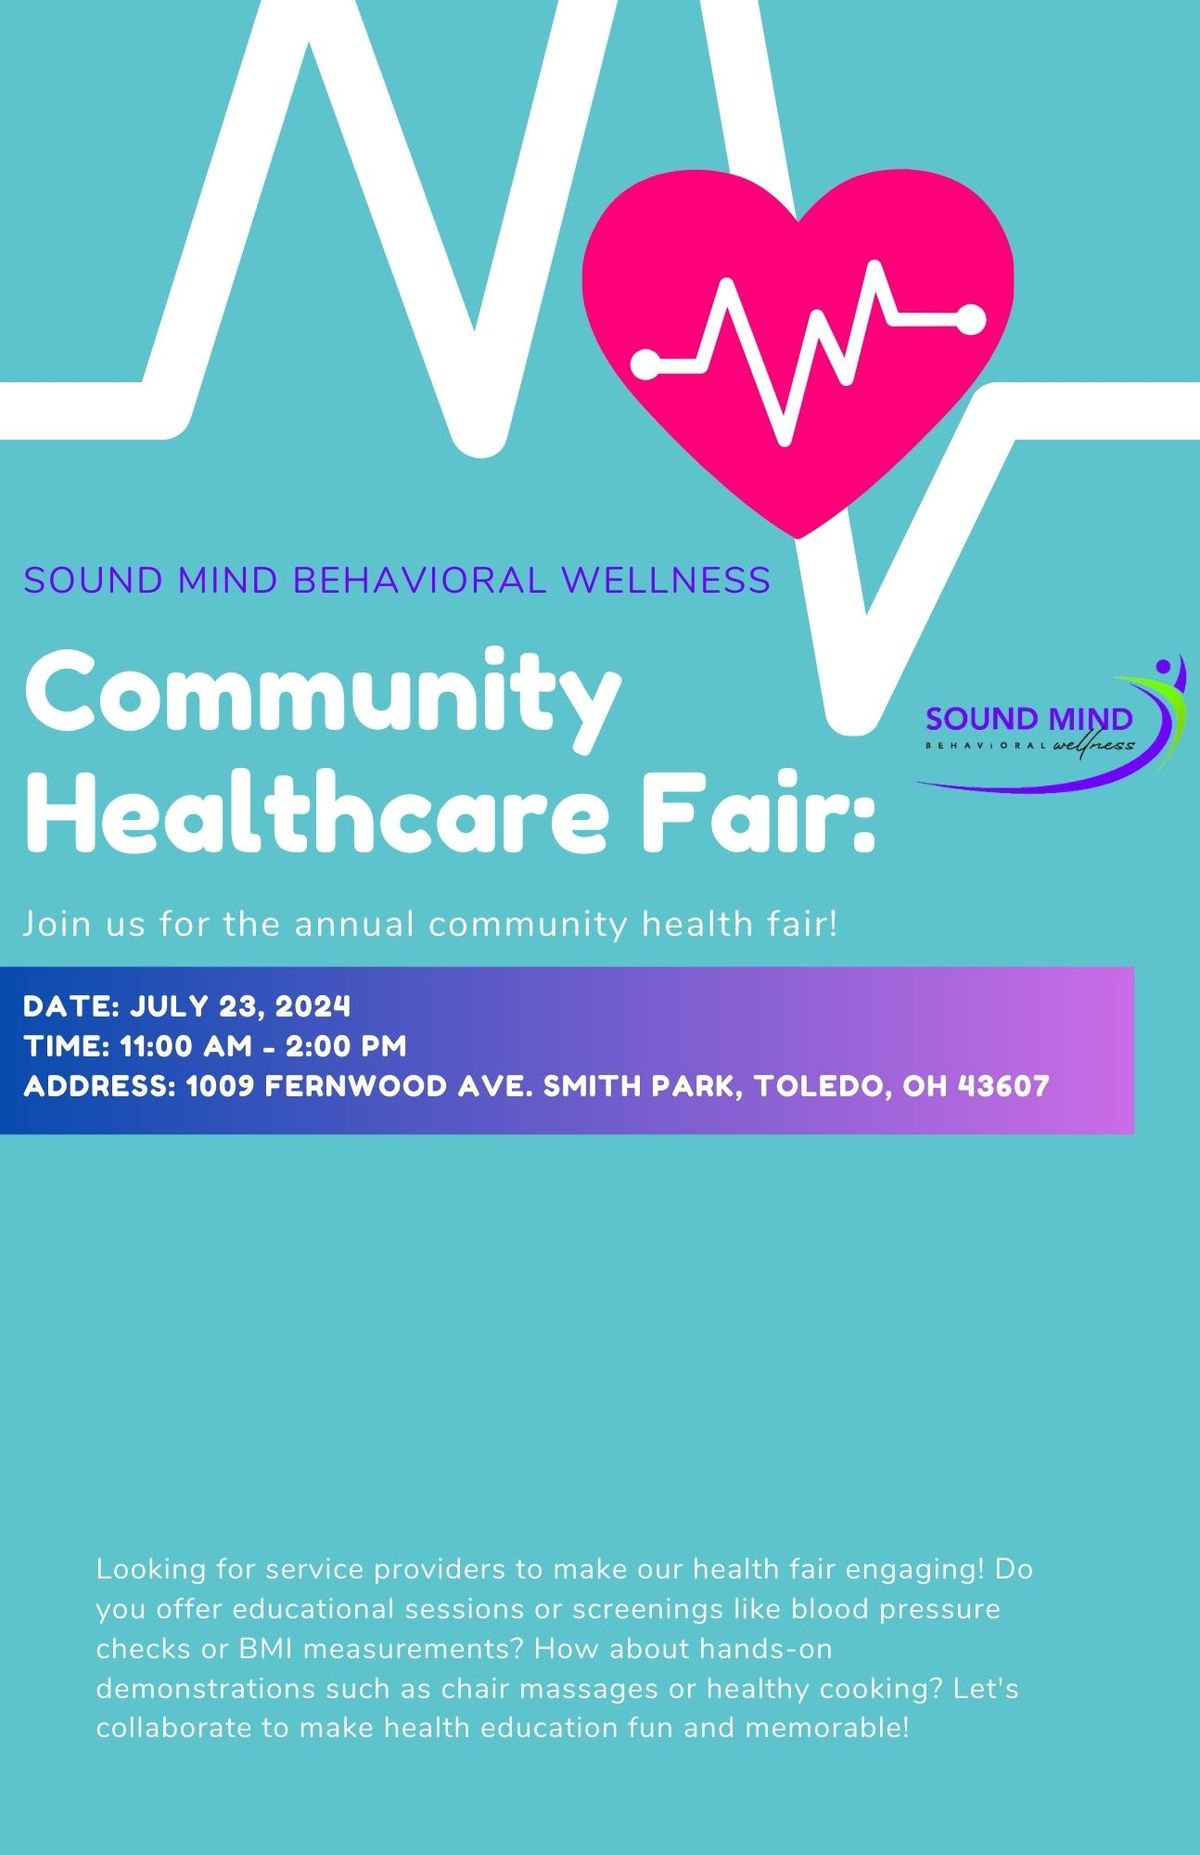 Kindred Heart Community Cancer Group & Sound Mind Behavioral Wellness Health Fair